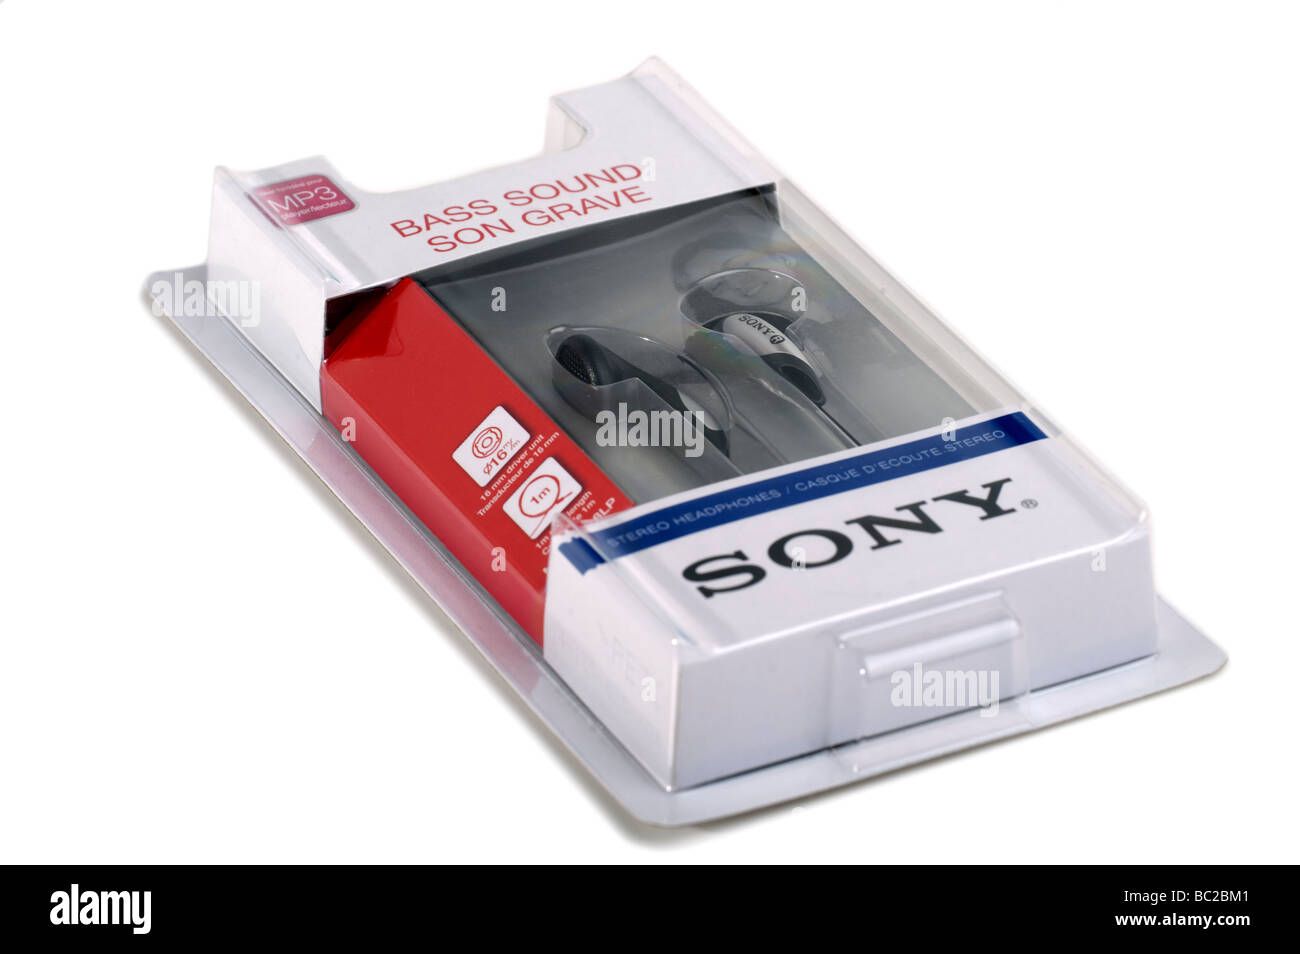 Cellophane pack of Sony earphones Stock Photo